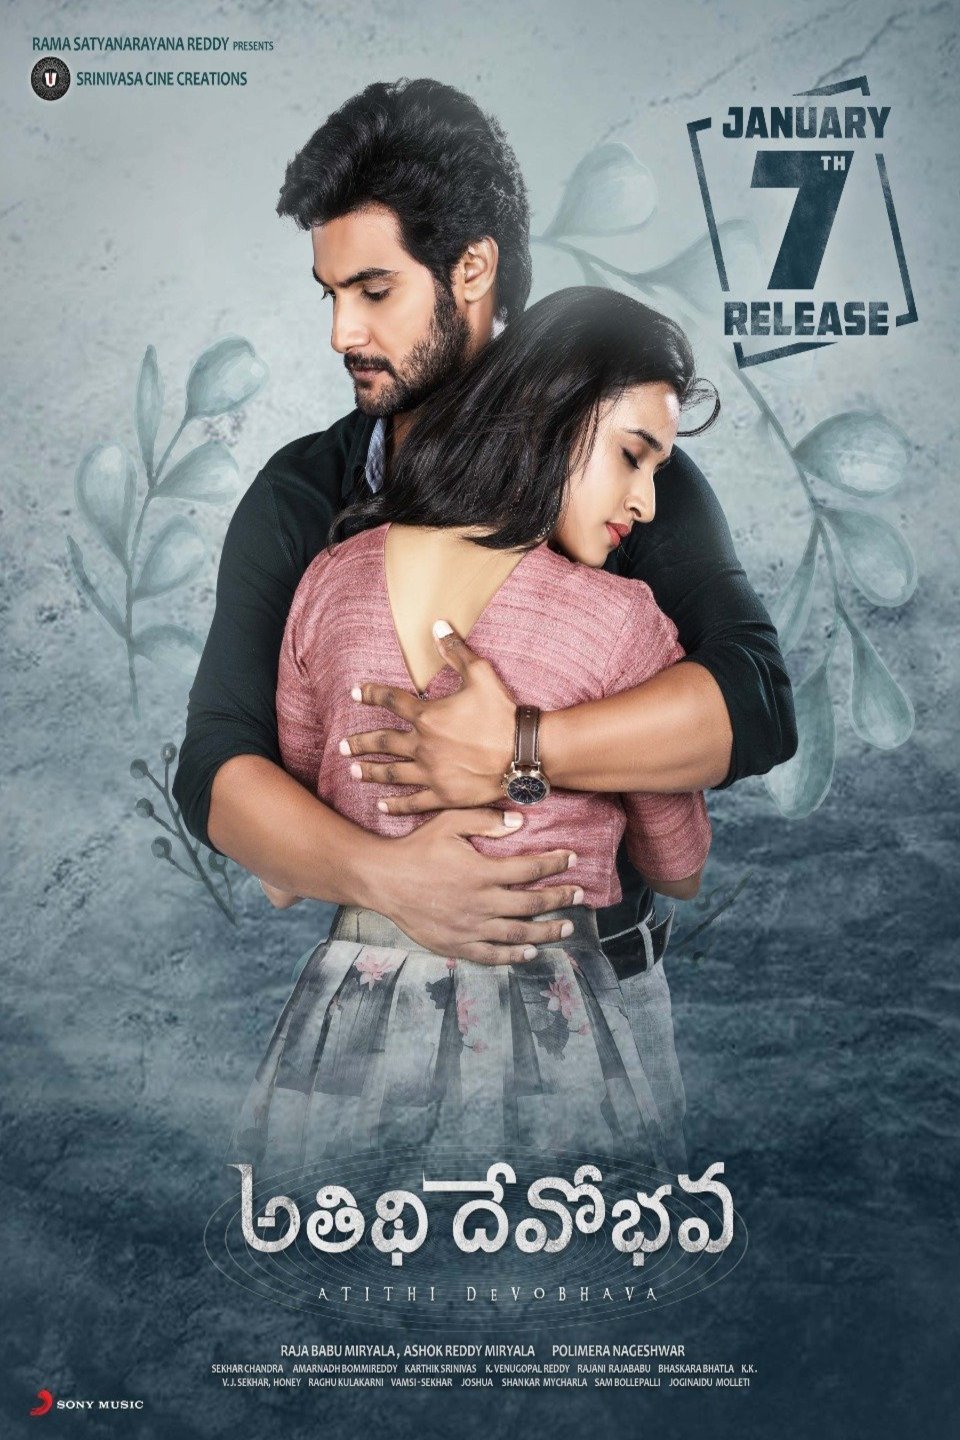 Telugu poster of the movie Atithi Devobhava